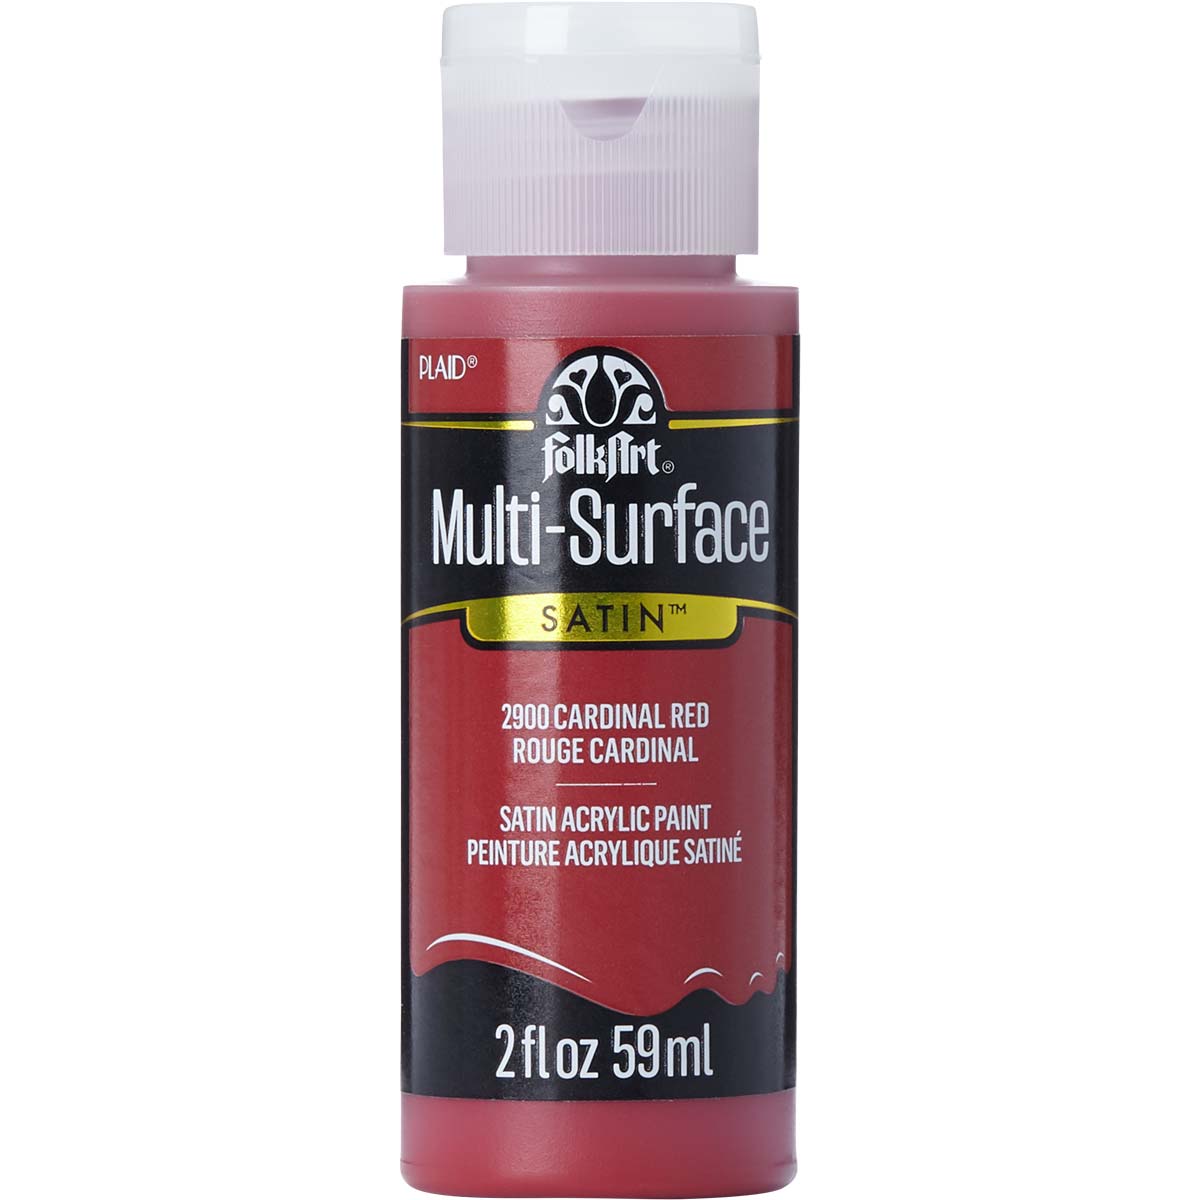 FolkArt ® Multi-Surface Satin Acrylic Paints - Cardinal Red, 2 oz. - 2900